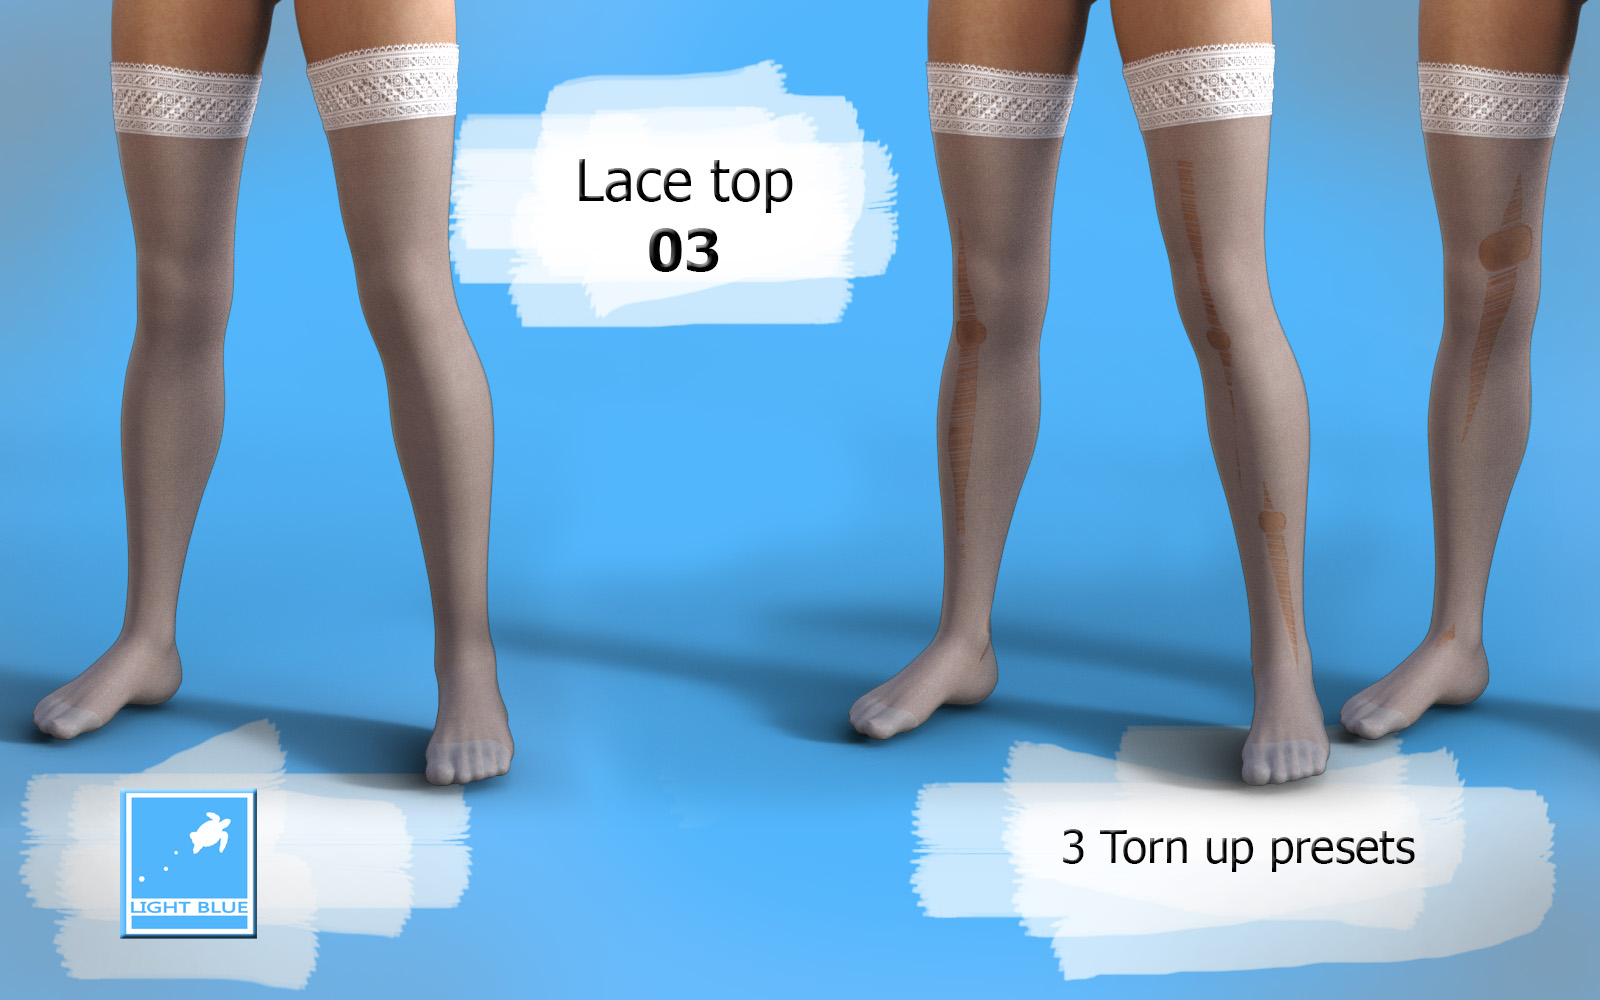 lightBLUE-dFORCE-Stocking-Sock-Lace-top-03.jpg